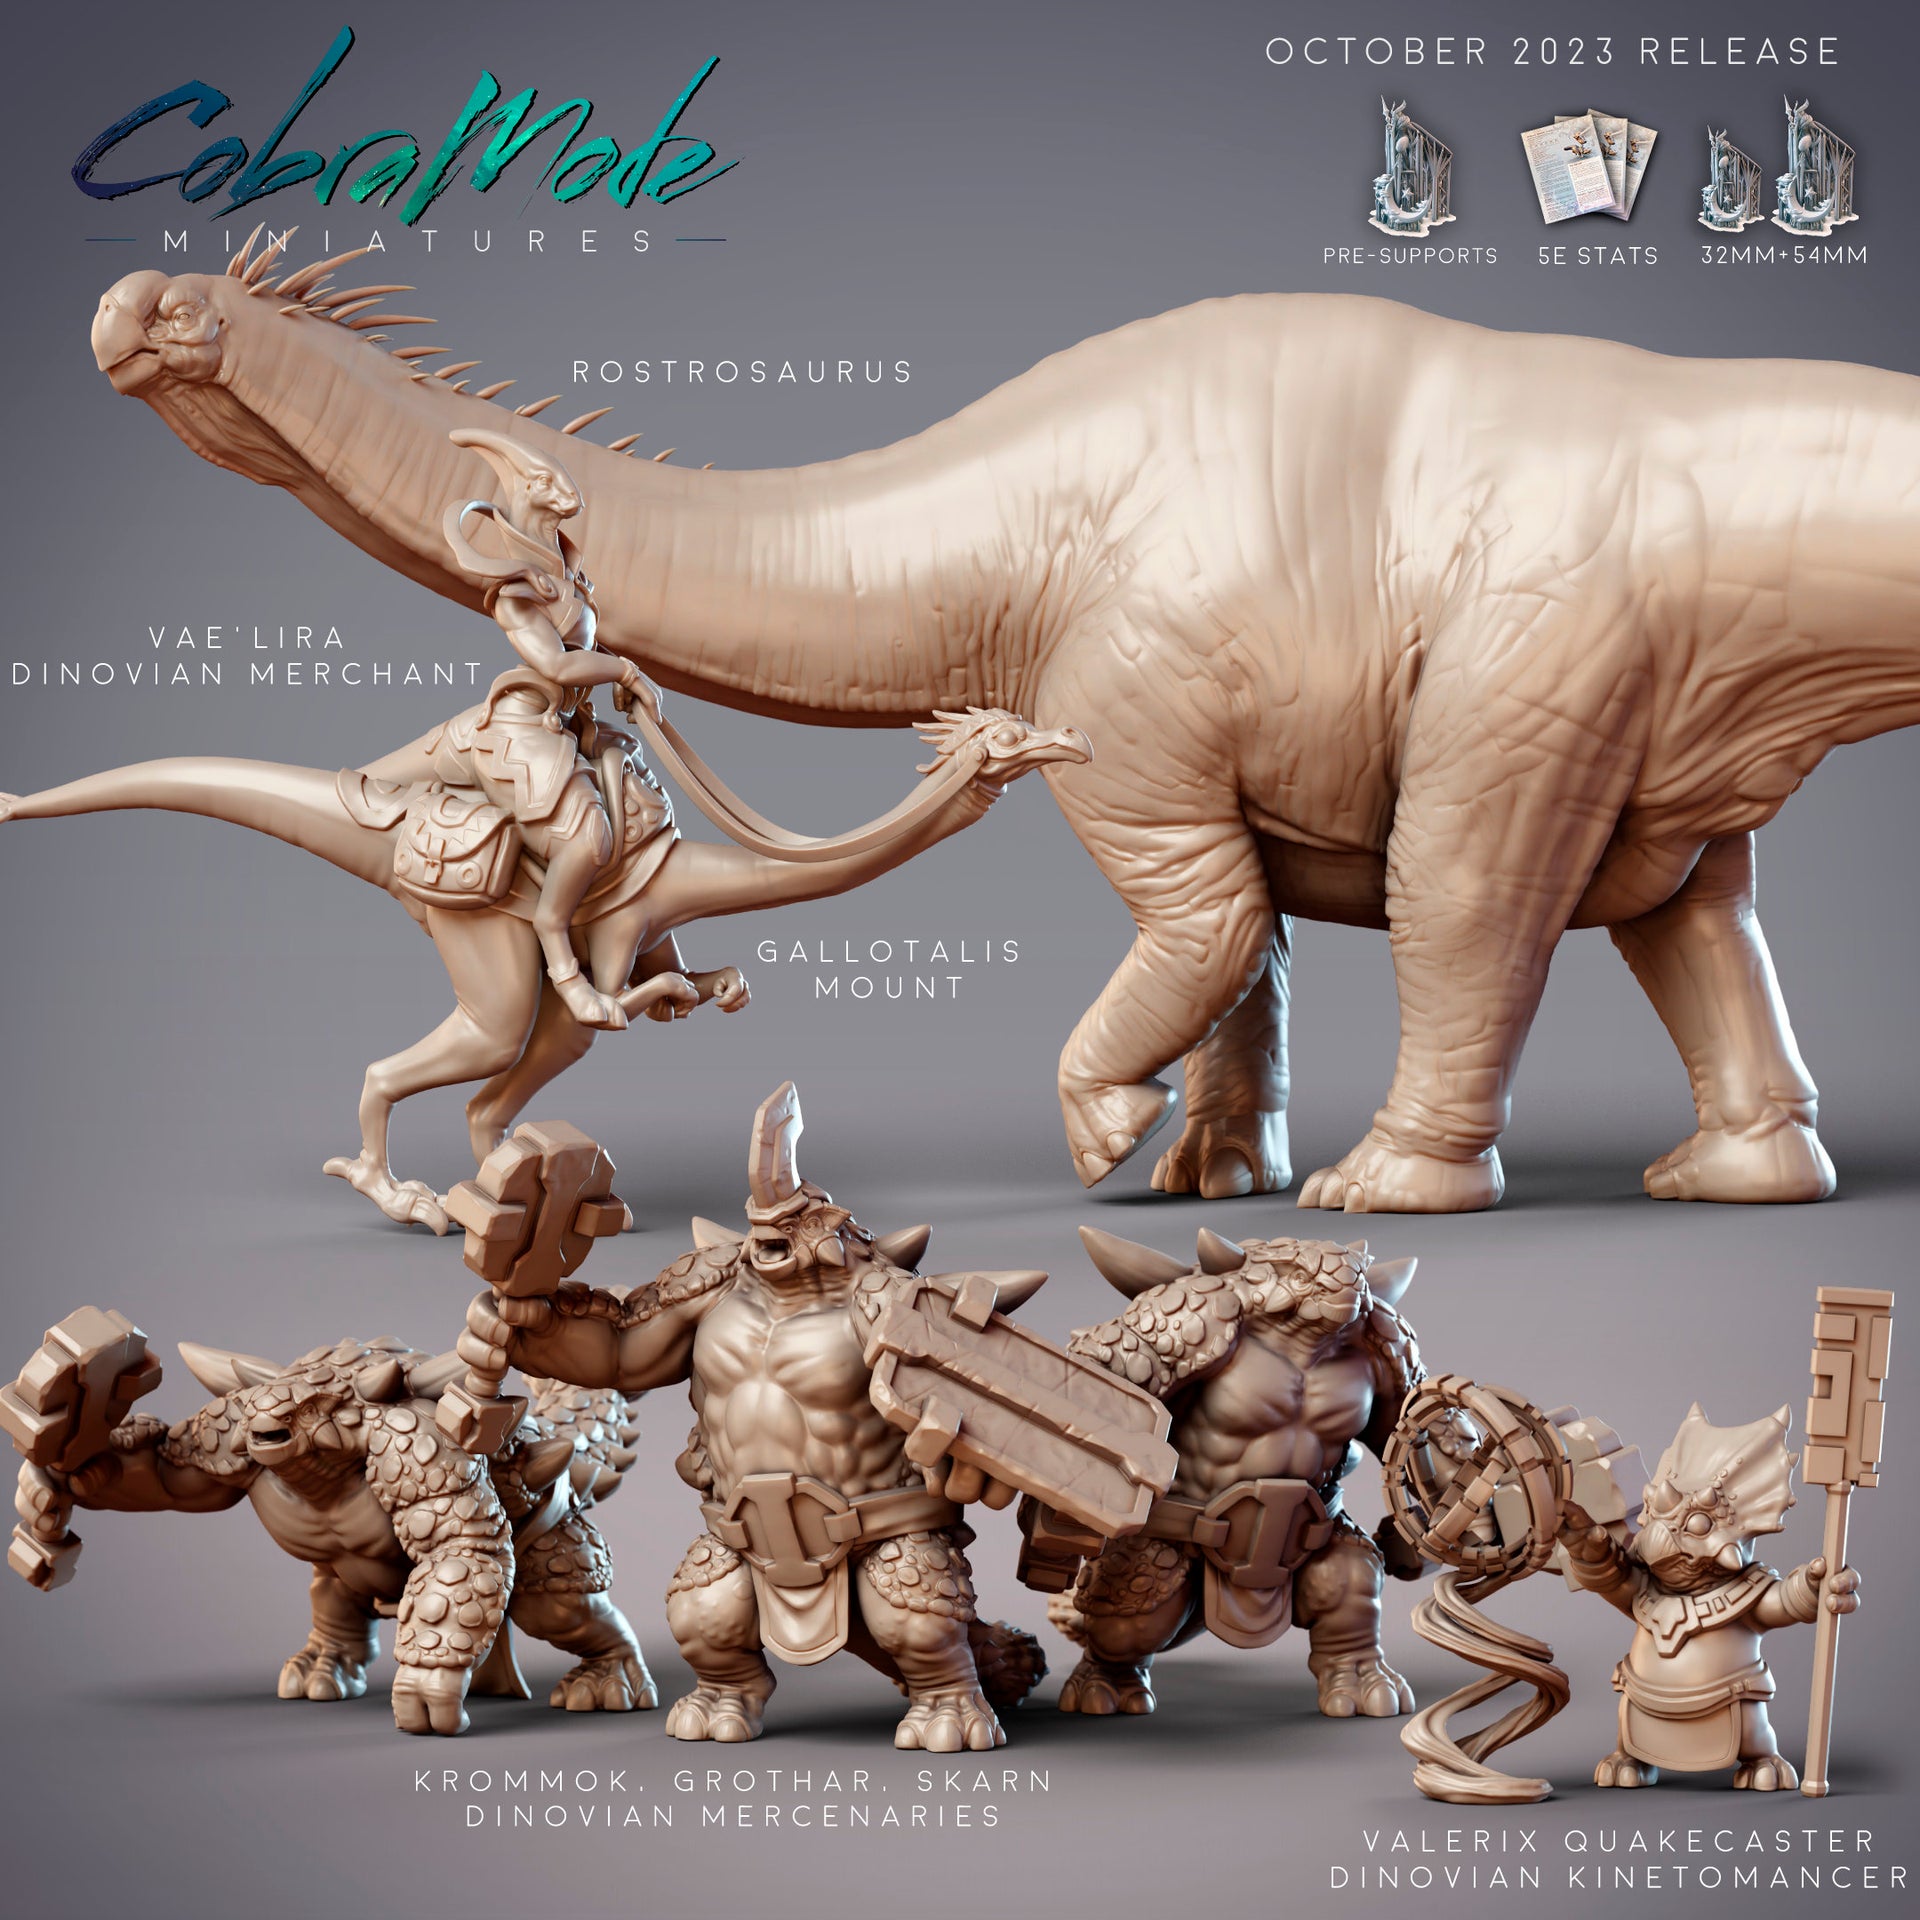 Dinovian Kinetomancer Valerixr, Dinosaur Folk Mage - CobraMode | Miniature | Wargaming | Roleplaying Games | 32mm | 54mm